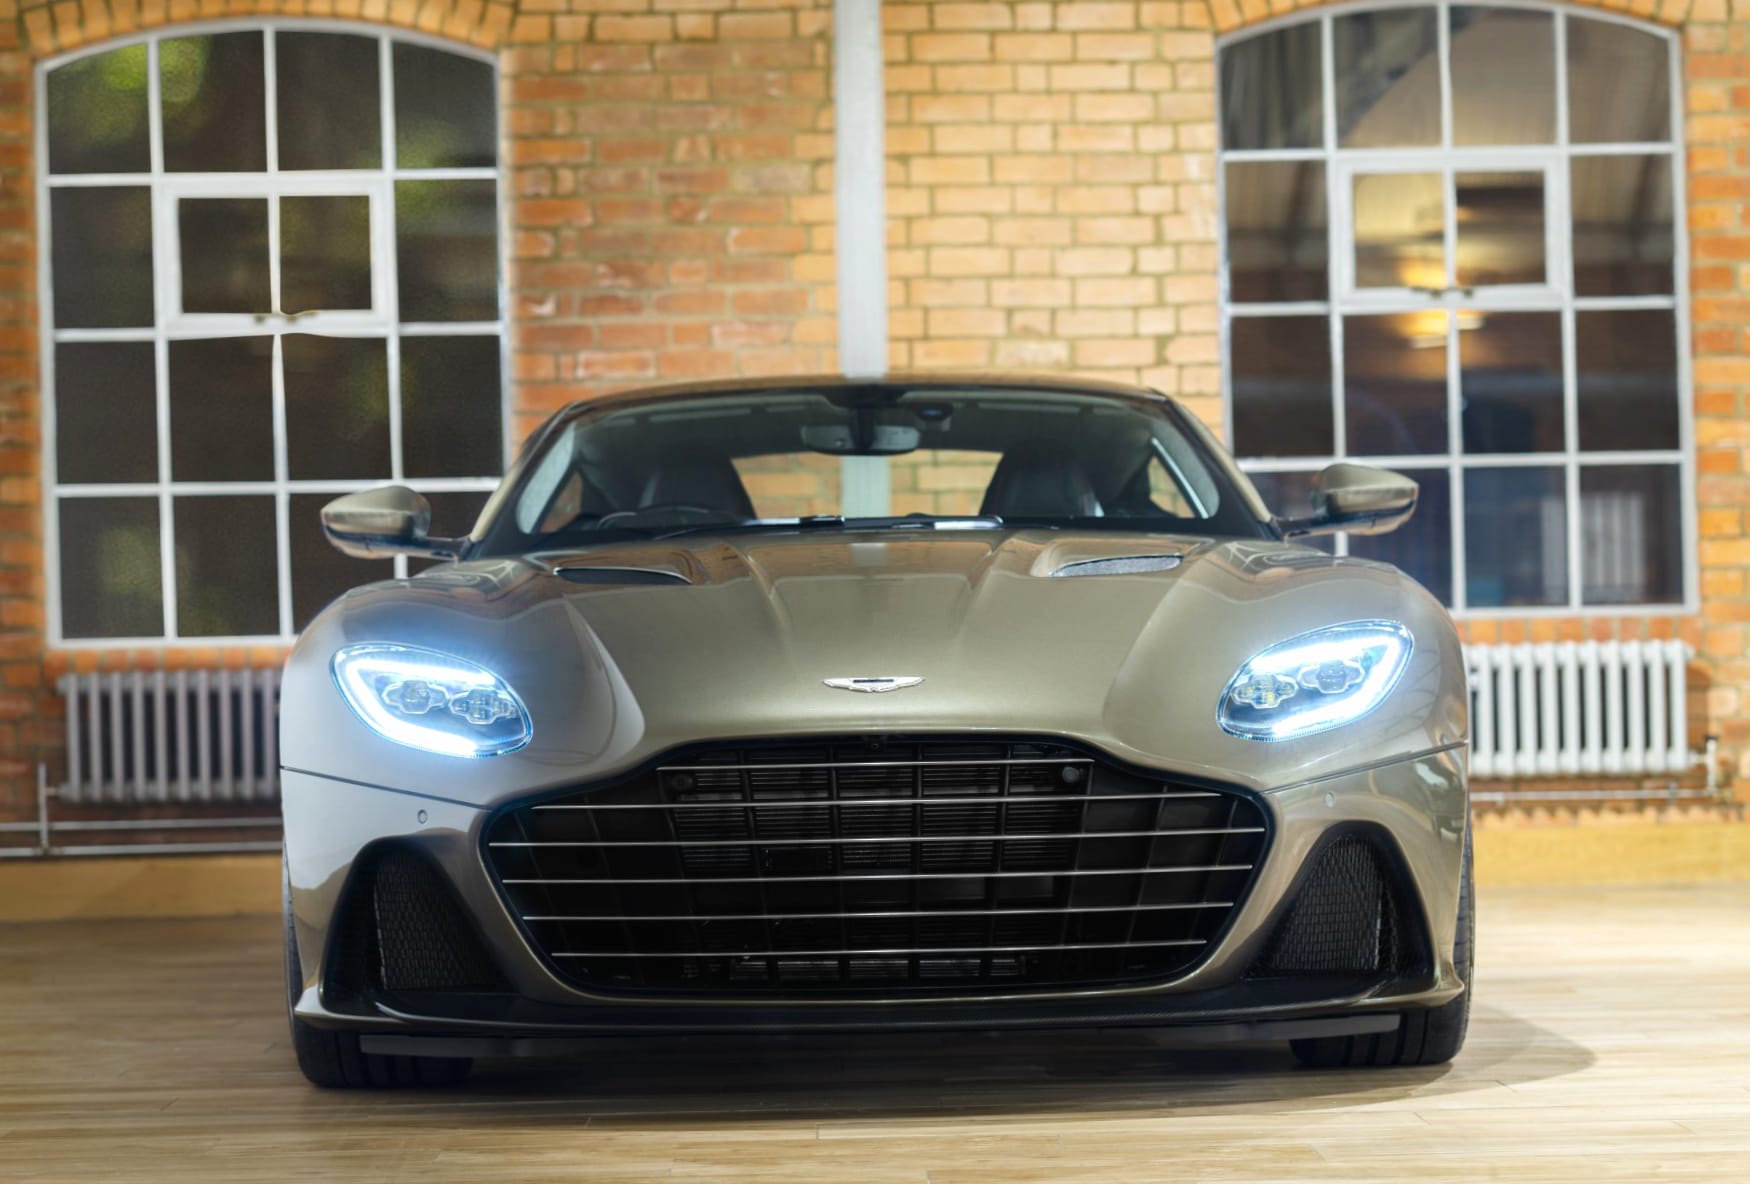 Aston Martin DBS Superleggera at 640 x 960 iPhone 4 size wallpapers HD quality